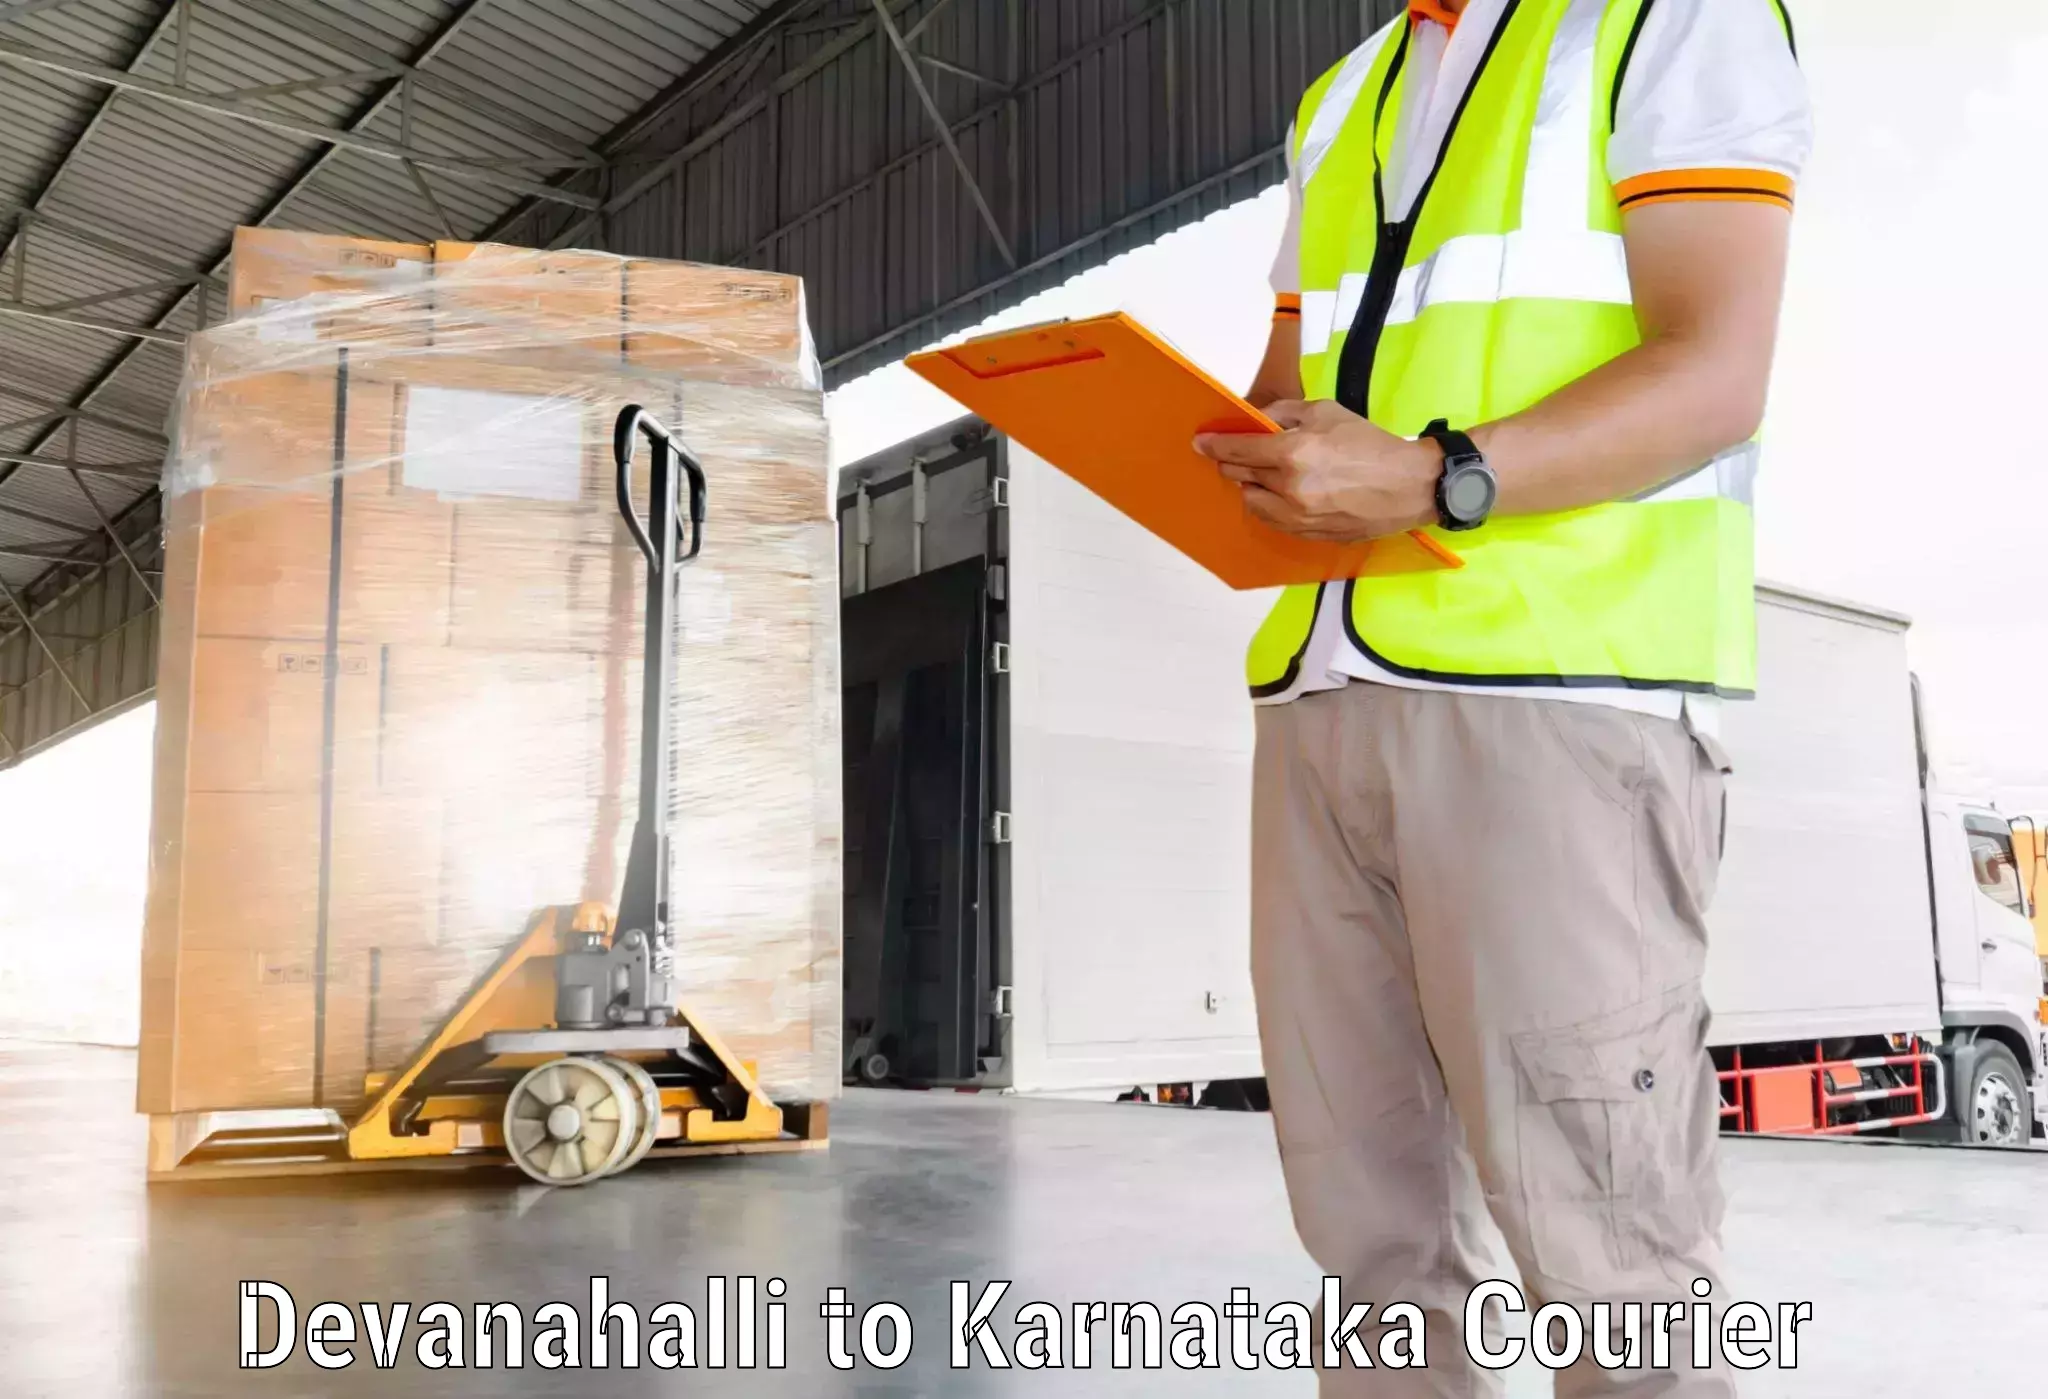 Global logistics network Devanahalli to Hanur